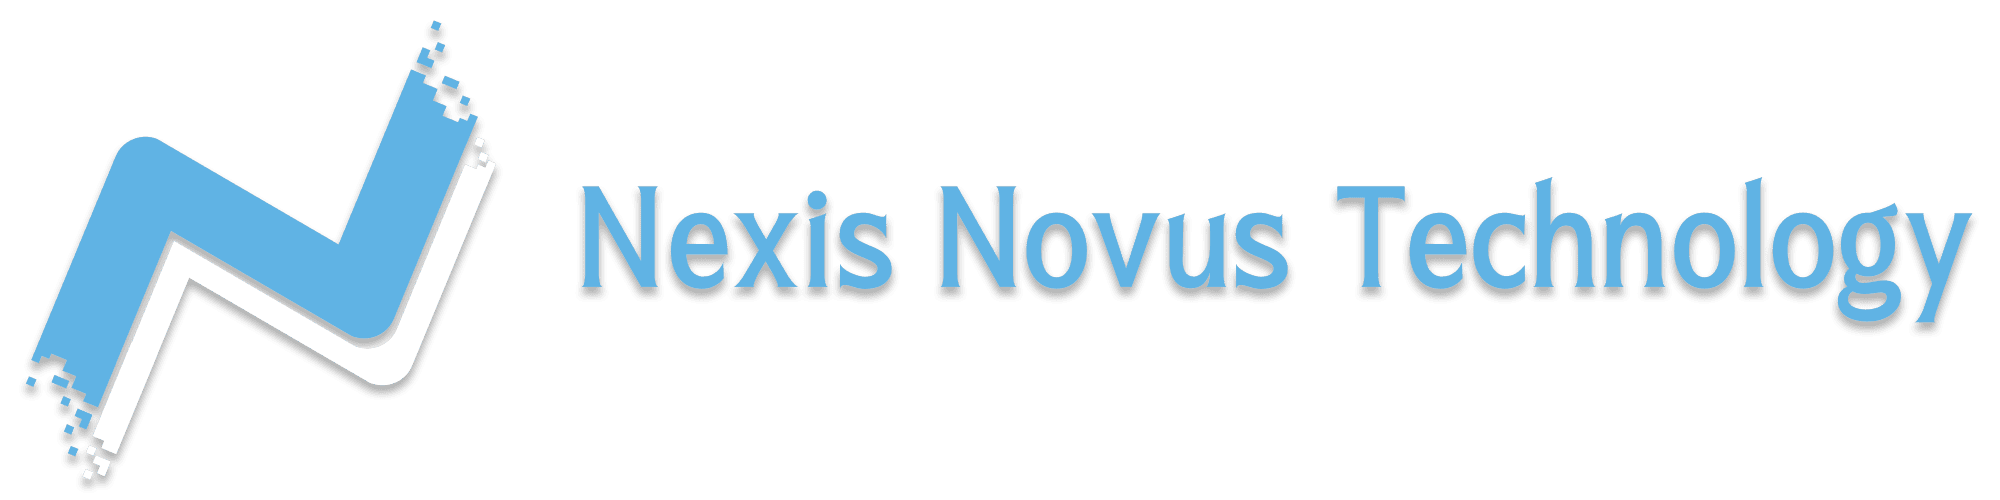 nexis novus technology